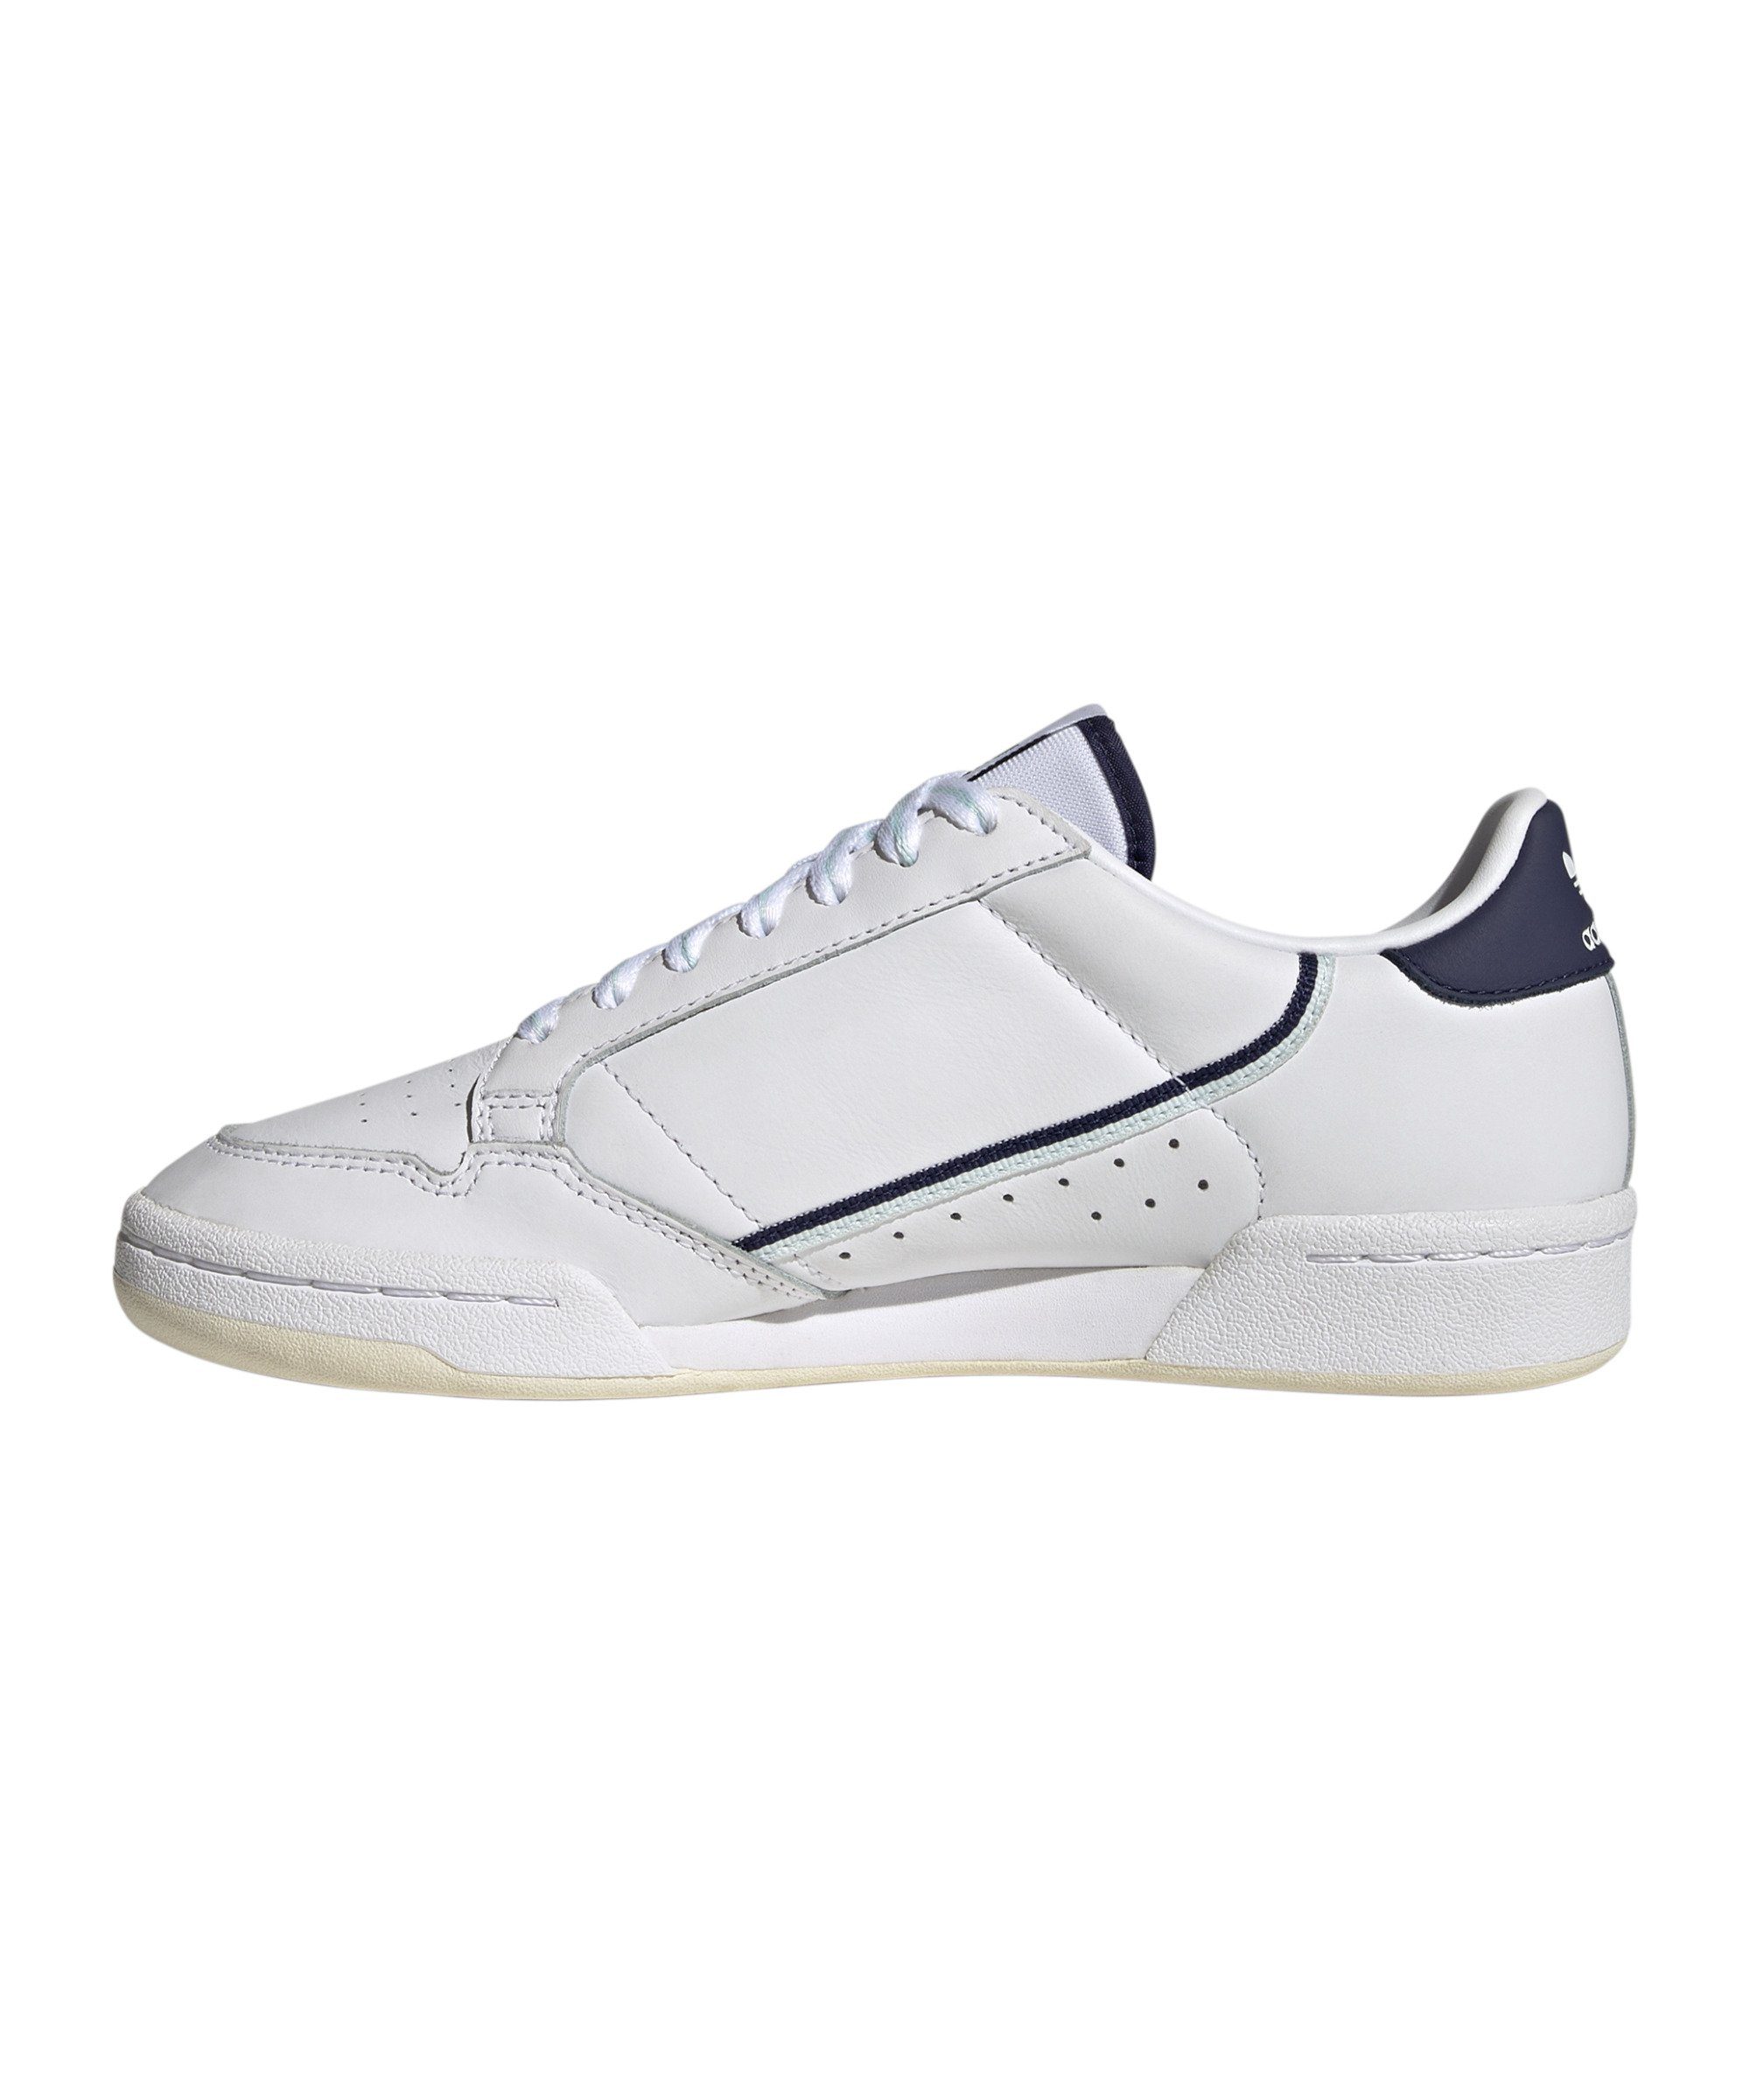 Damen Originals adidas Continental Sneaker 80